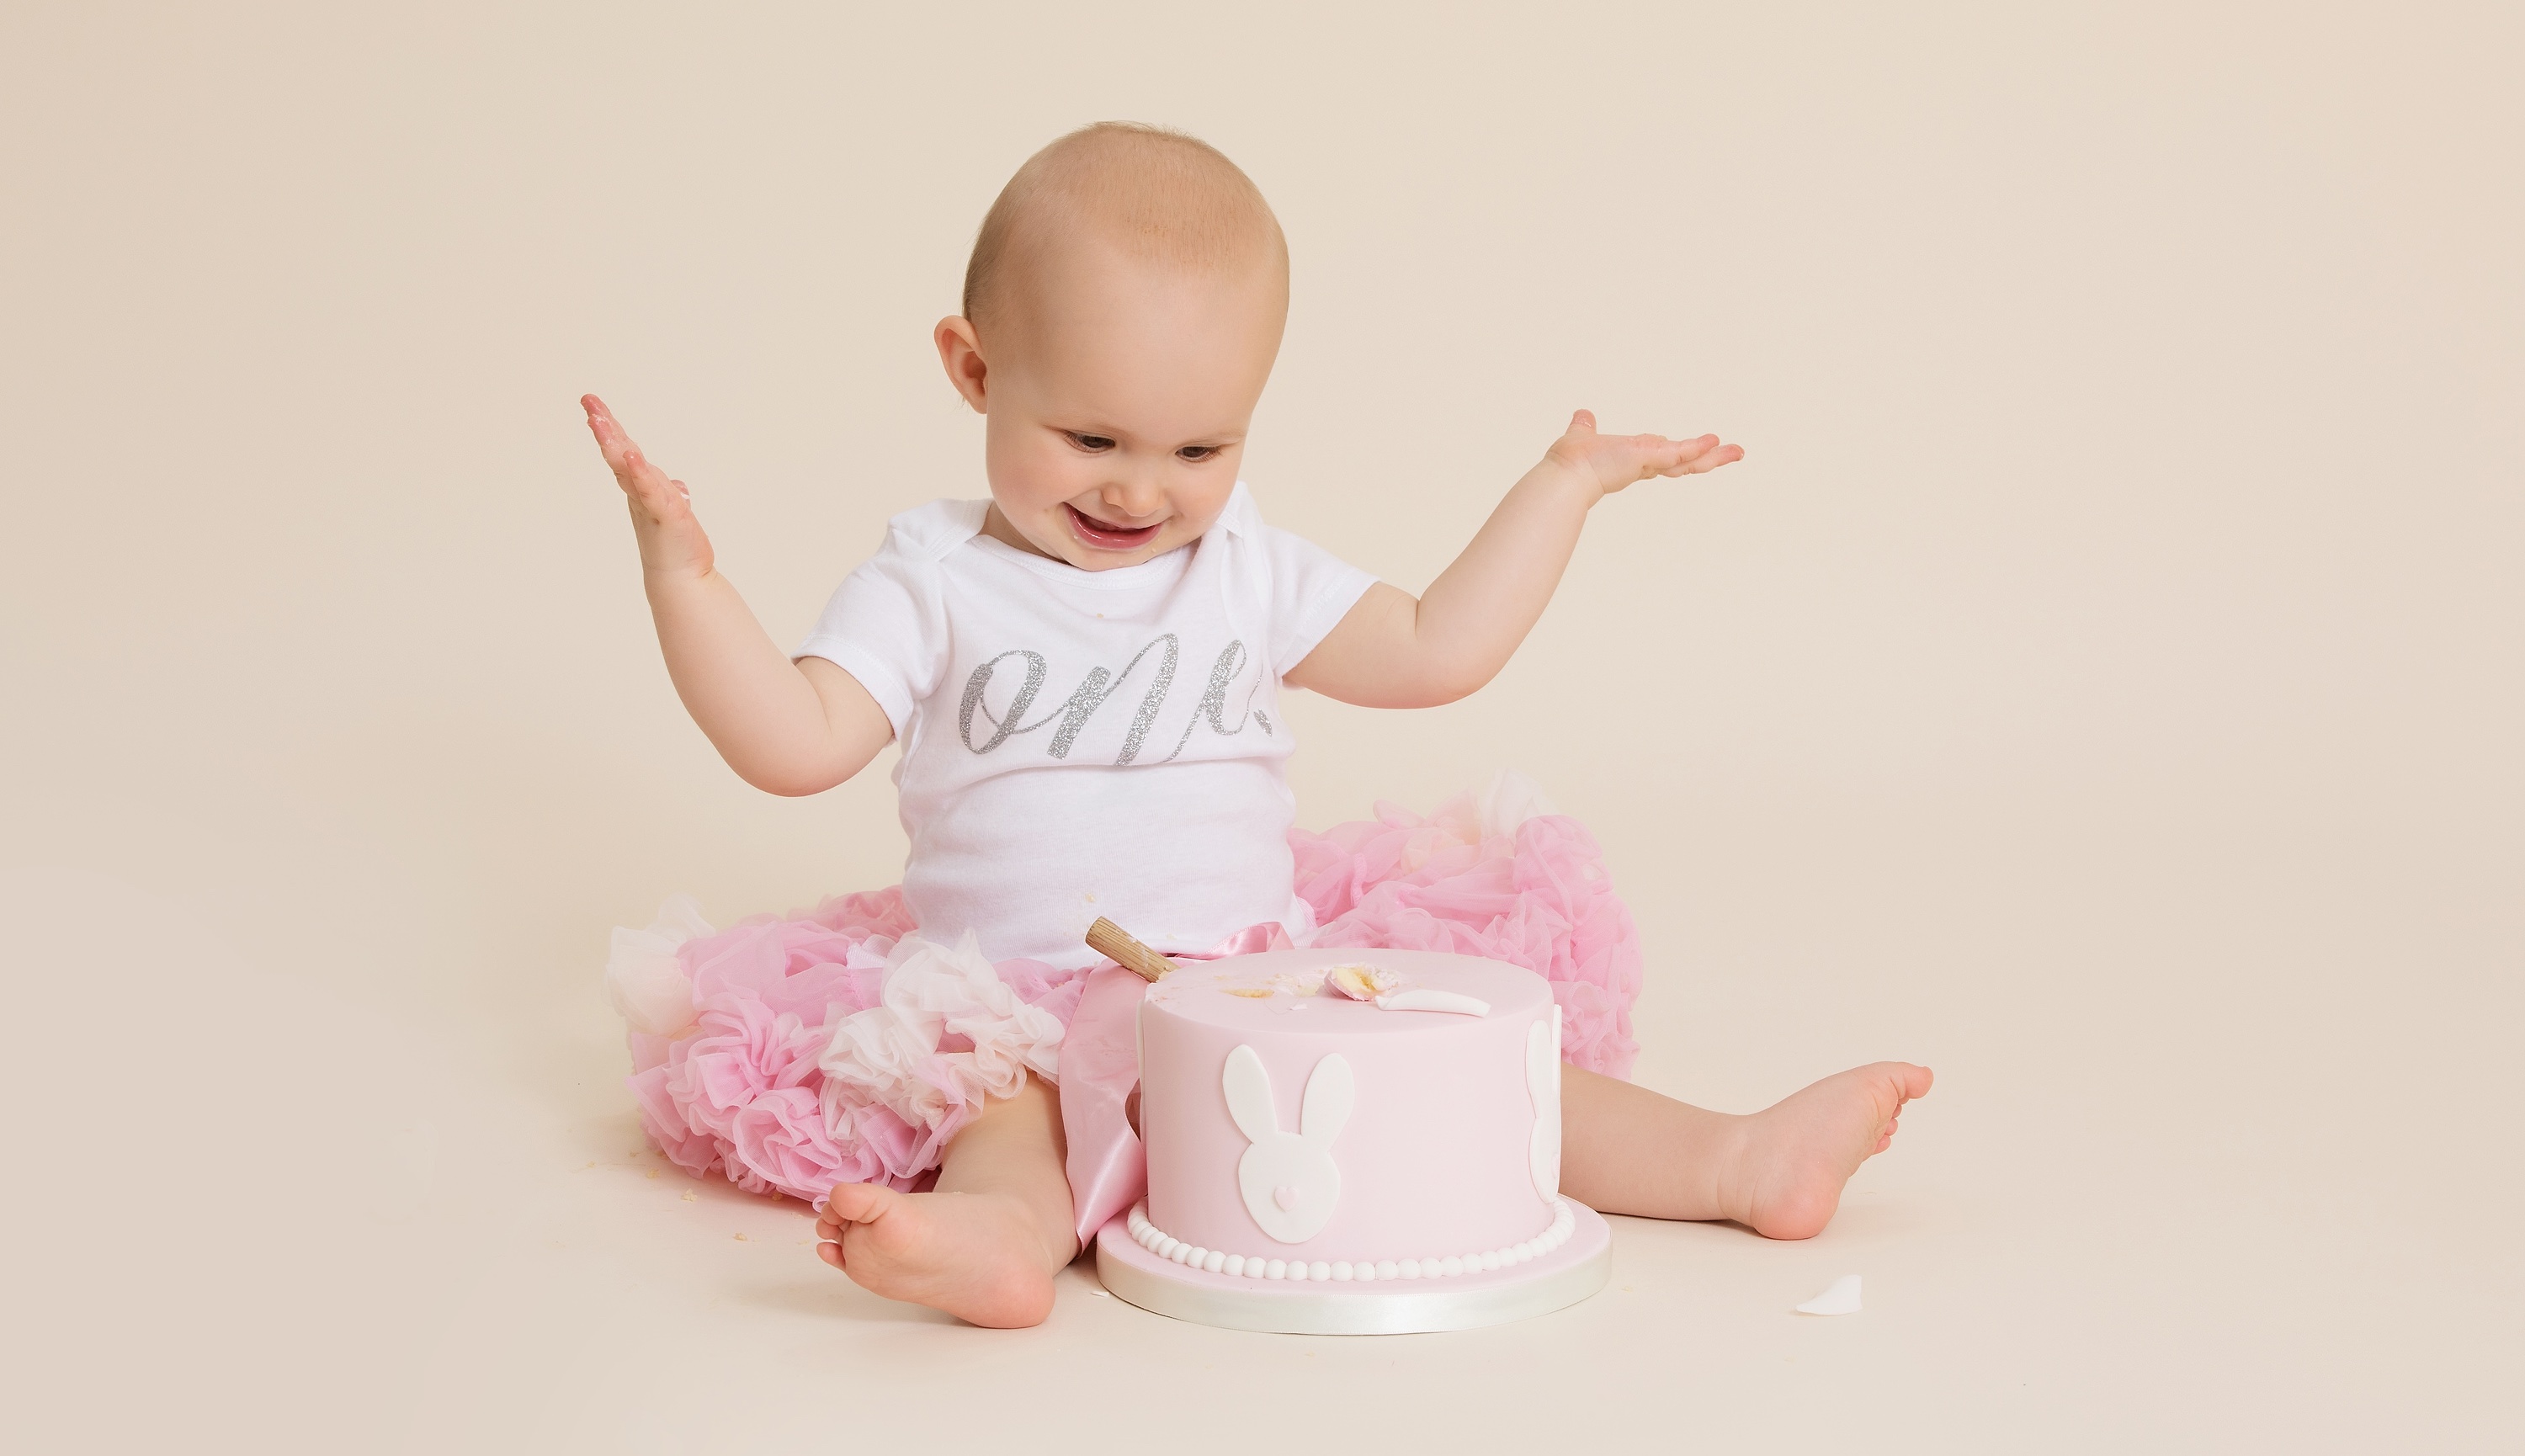 danielle jones photography | Newborn and Cake smash Photographer